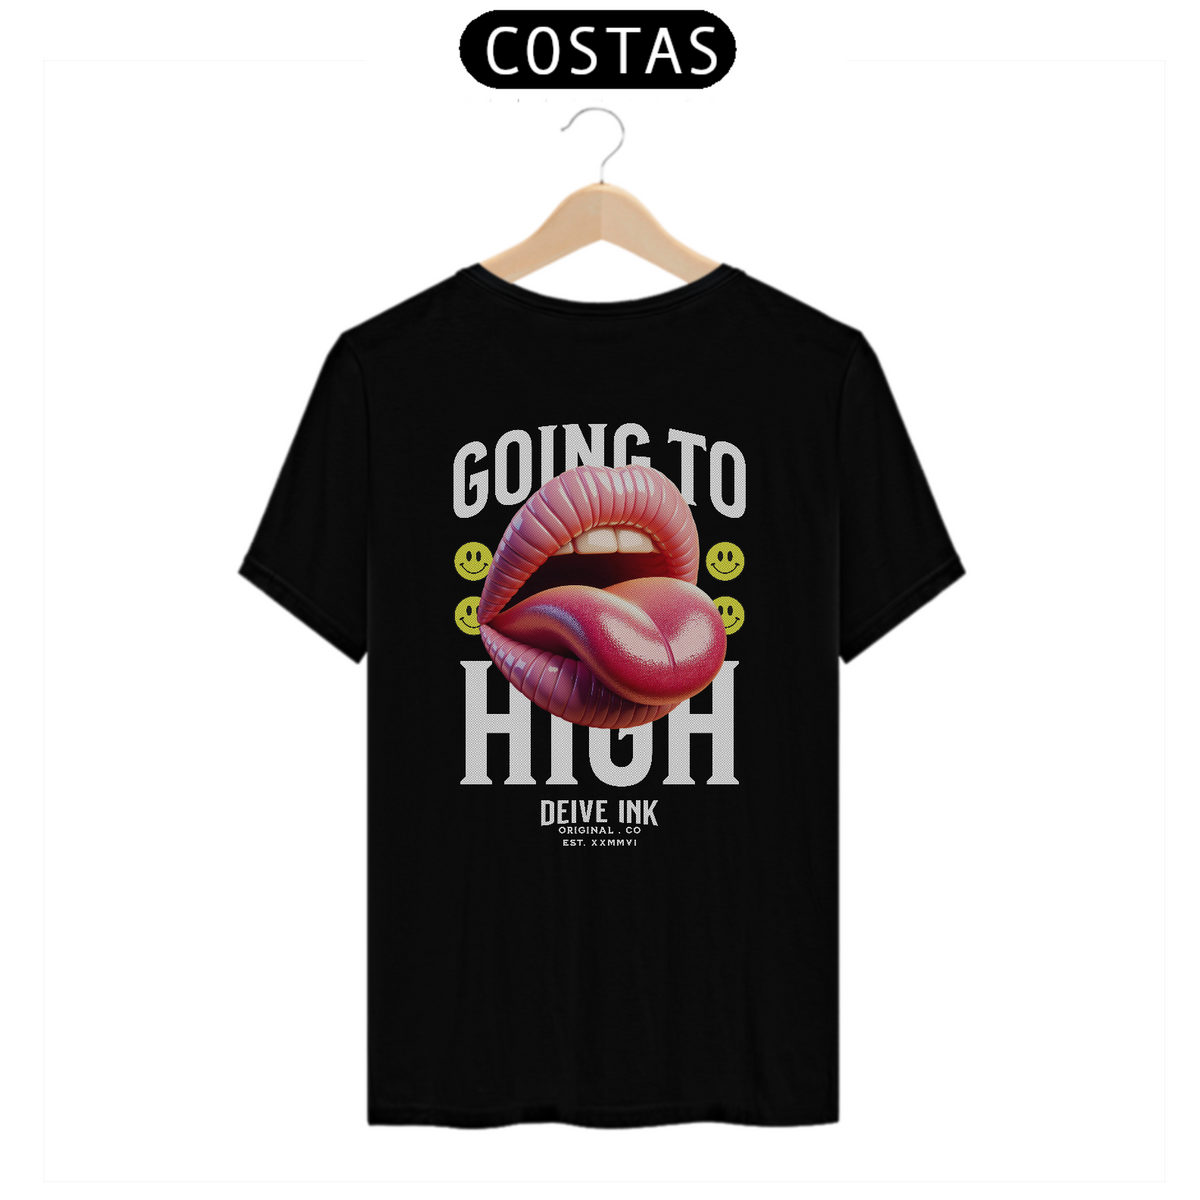 Nome do produto: Camiseta Going to the High 